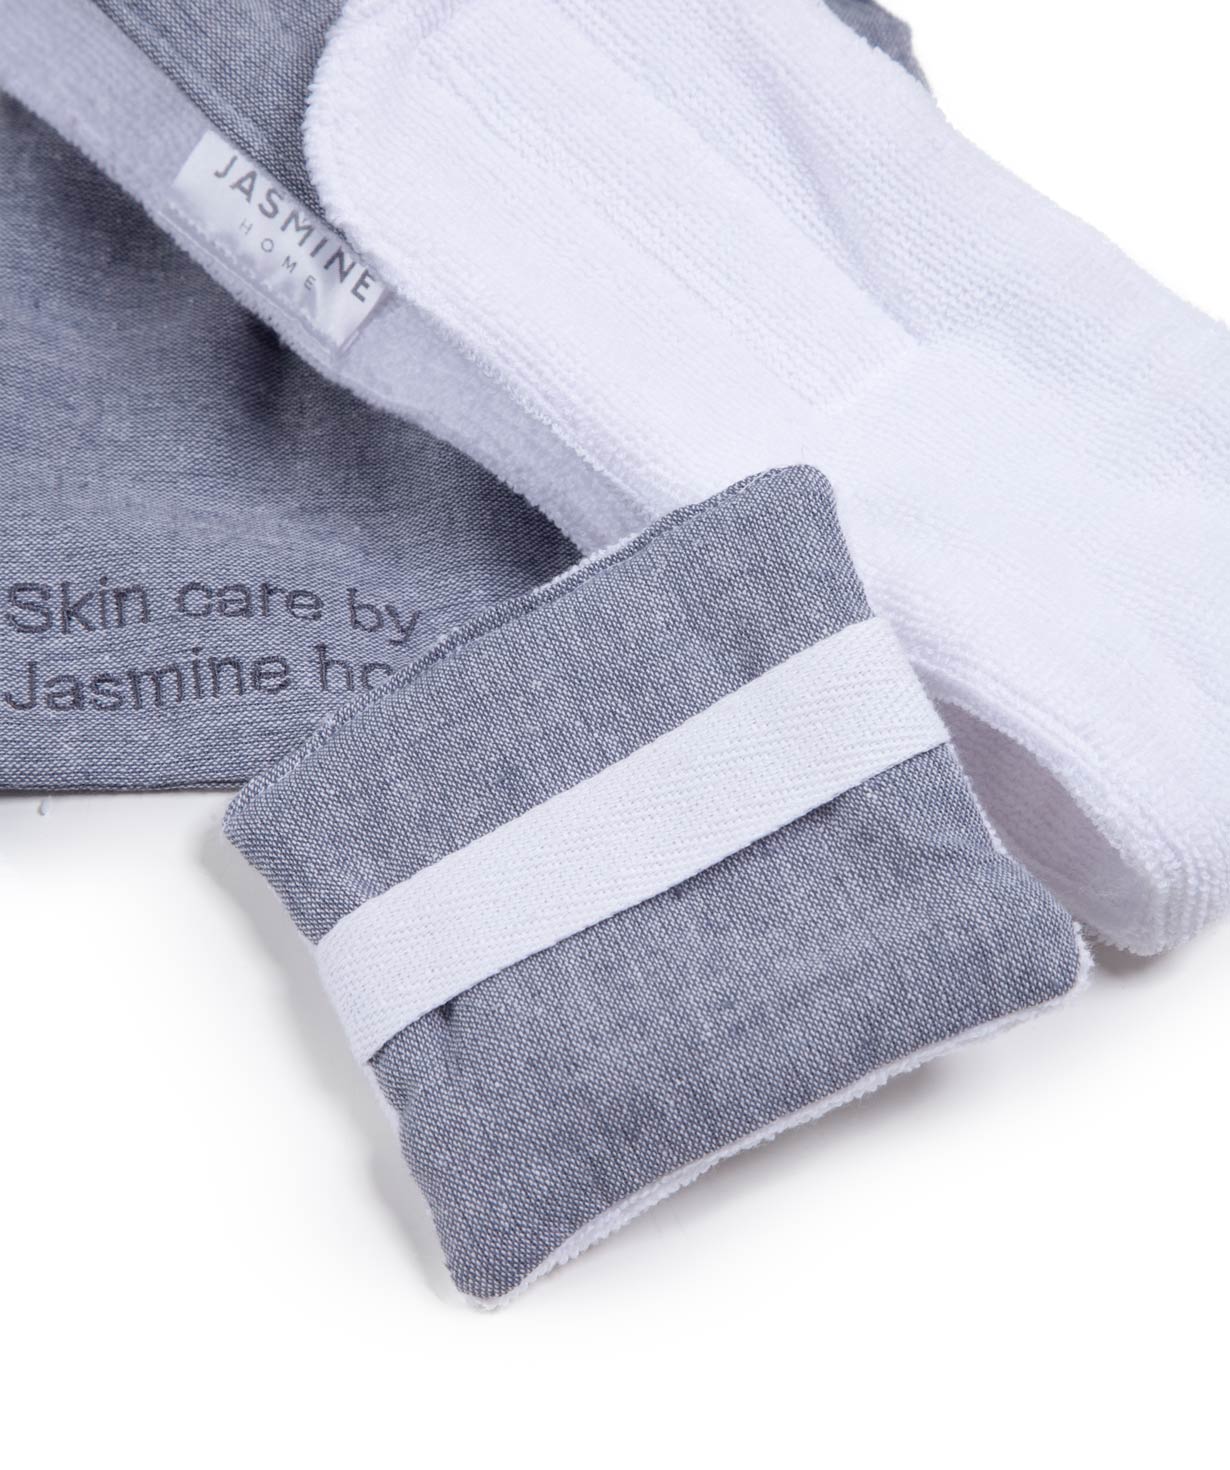 Խնամքի հավաքածու «Jasmine Home» Skin Care №1